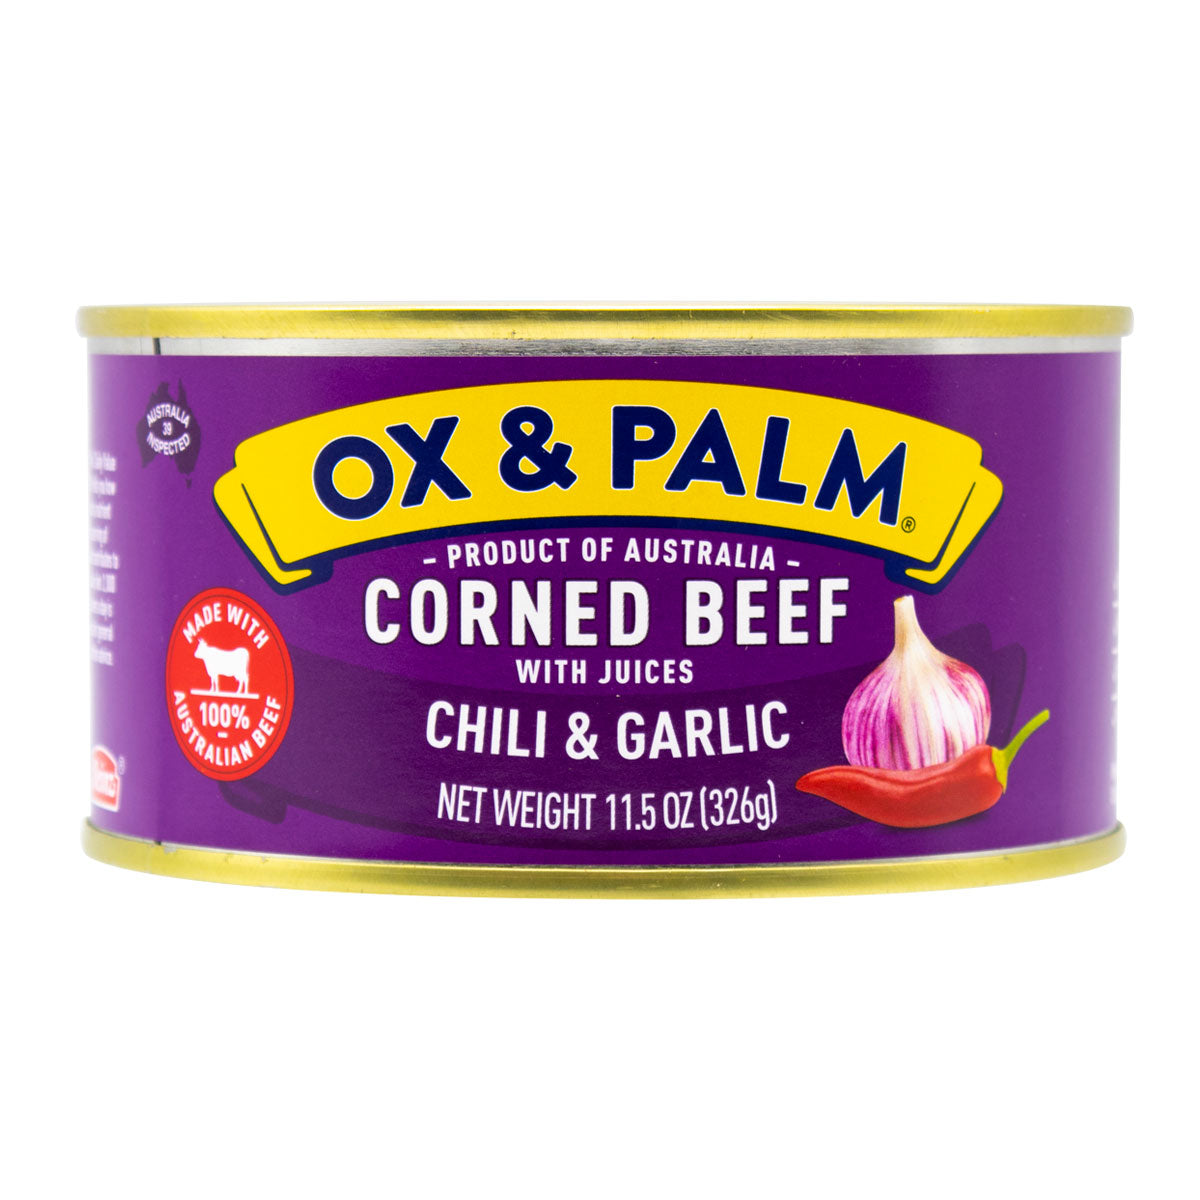 OX & PALM CHILI GARLIC CHUNKY CORNED BEEF 11.5 OZ